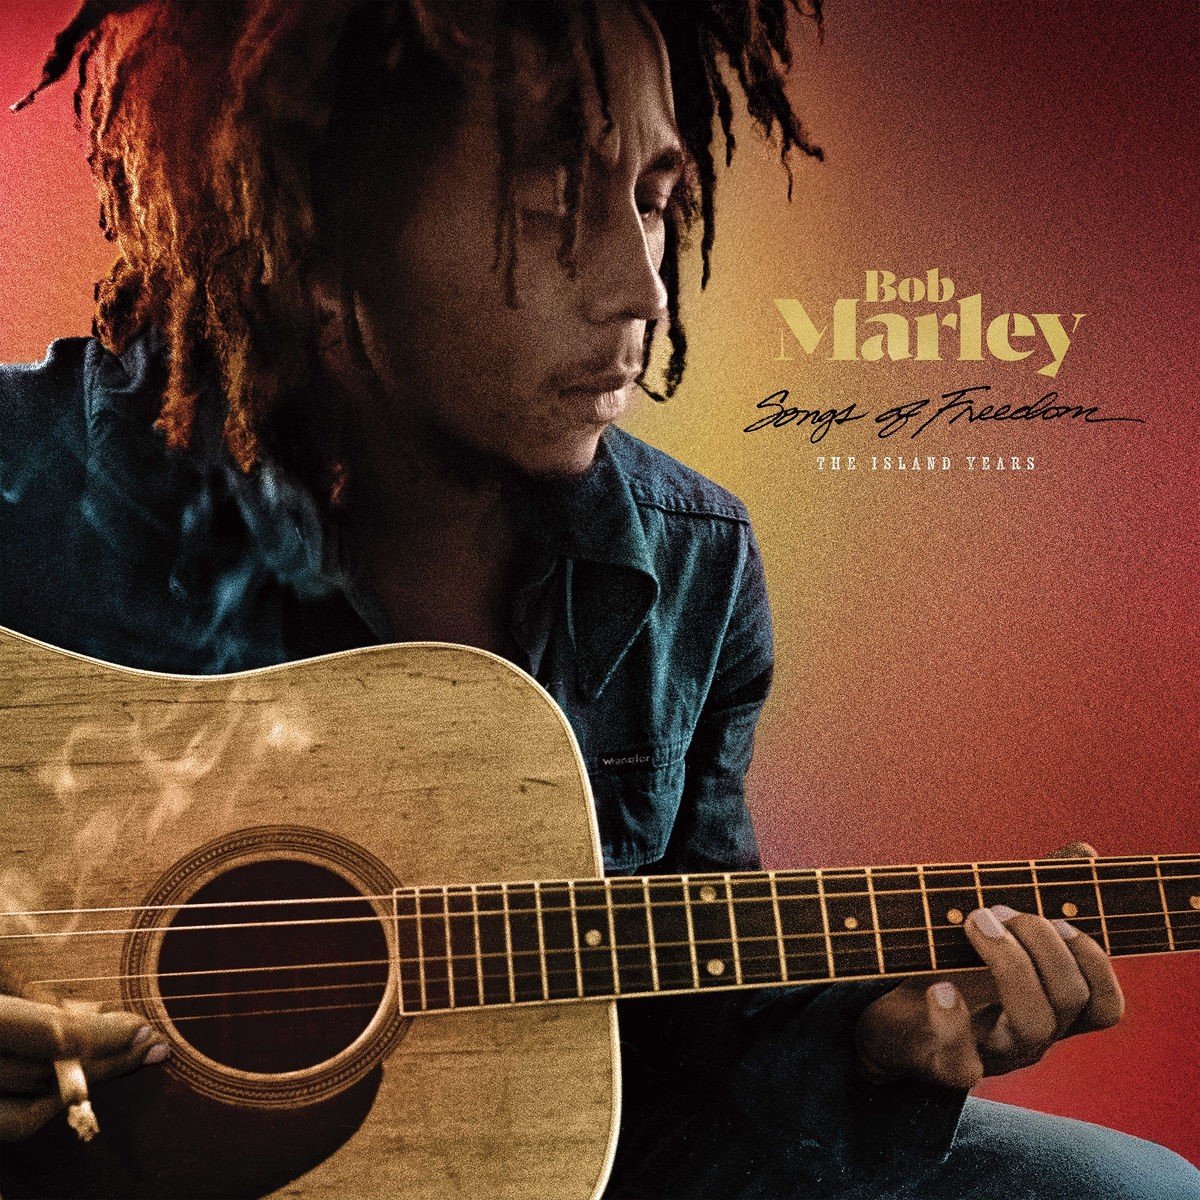 Bob Marley - Songs Of Freedom: The Island Years (6 LP) (Limited Edition) - Bob Marley